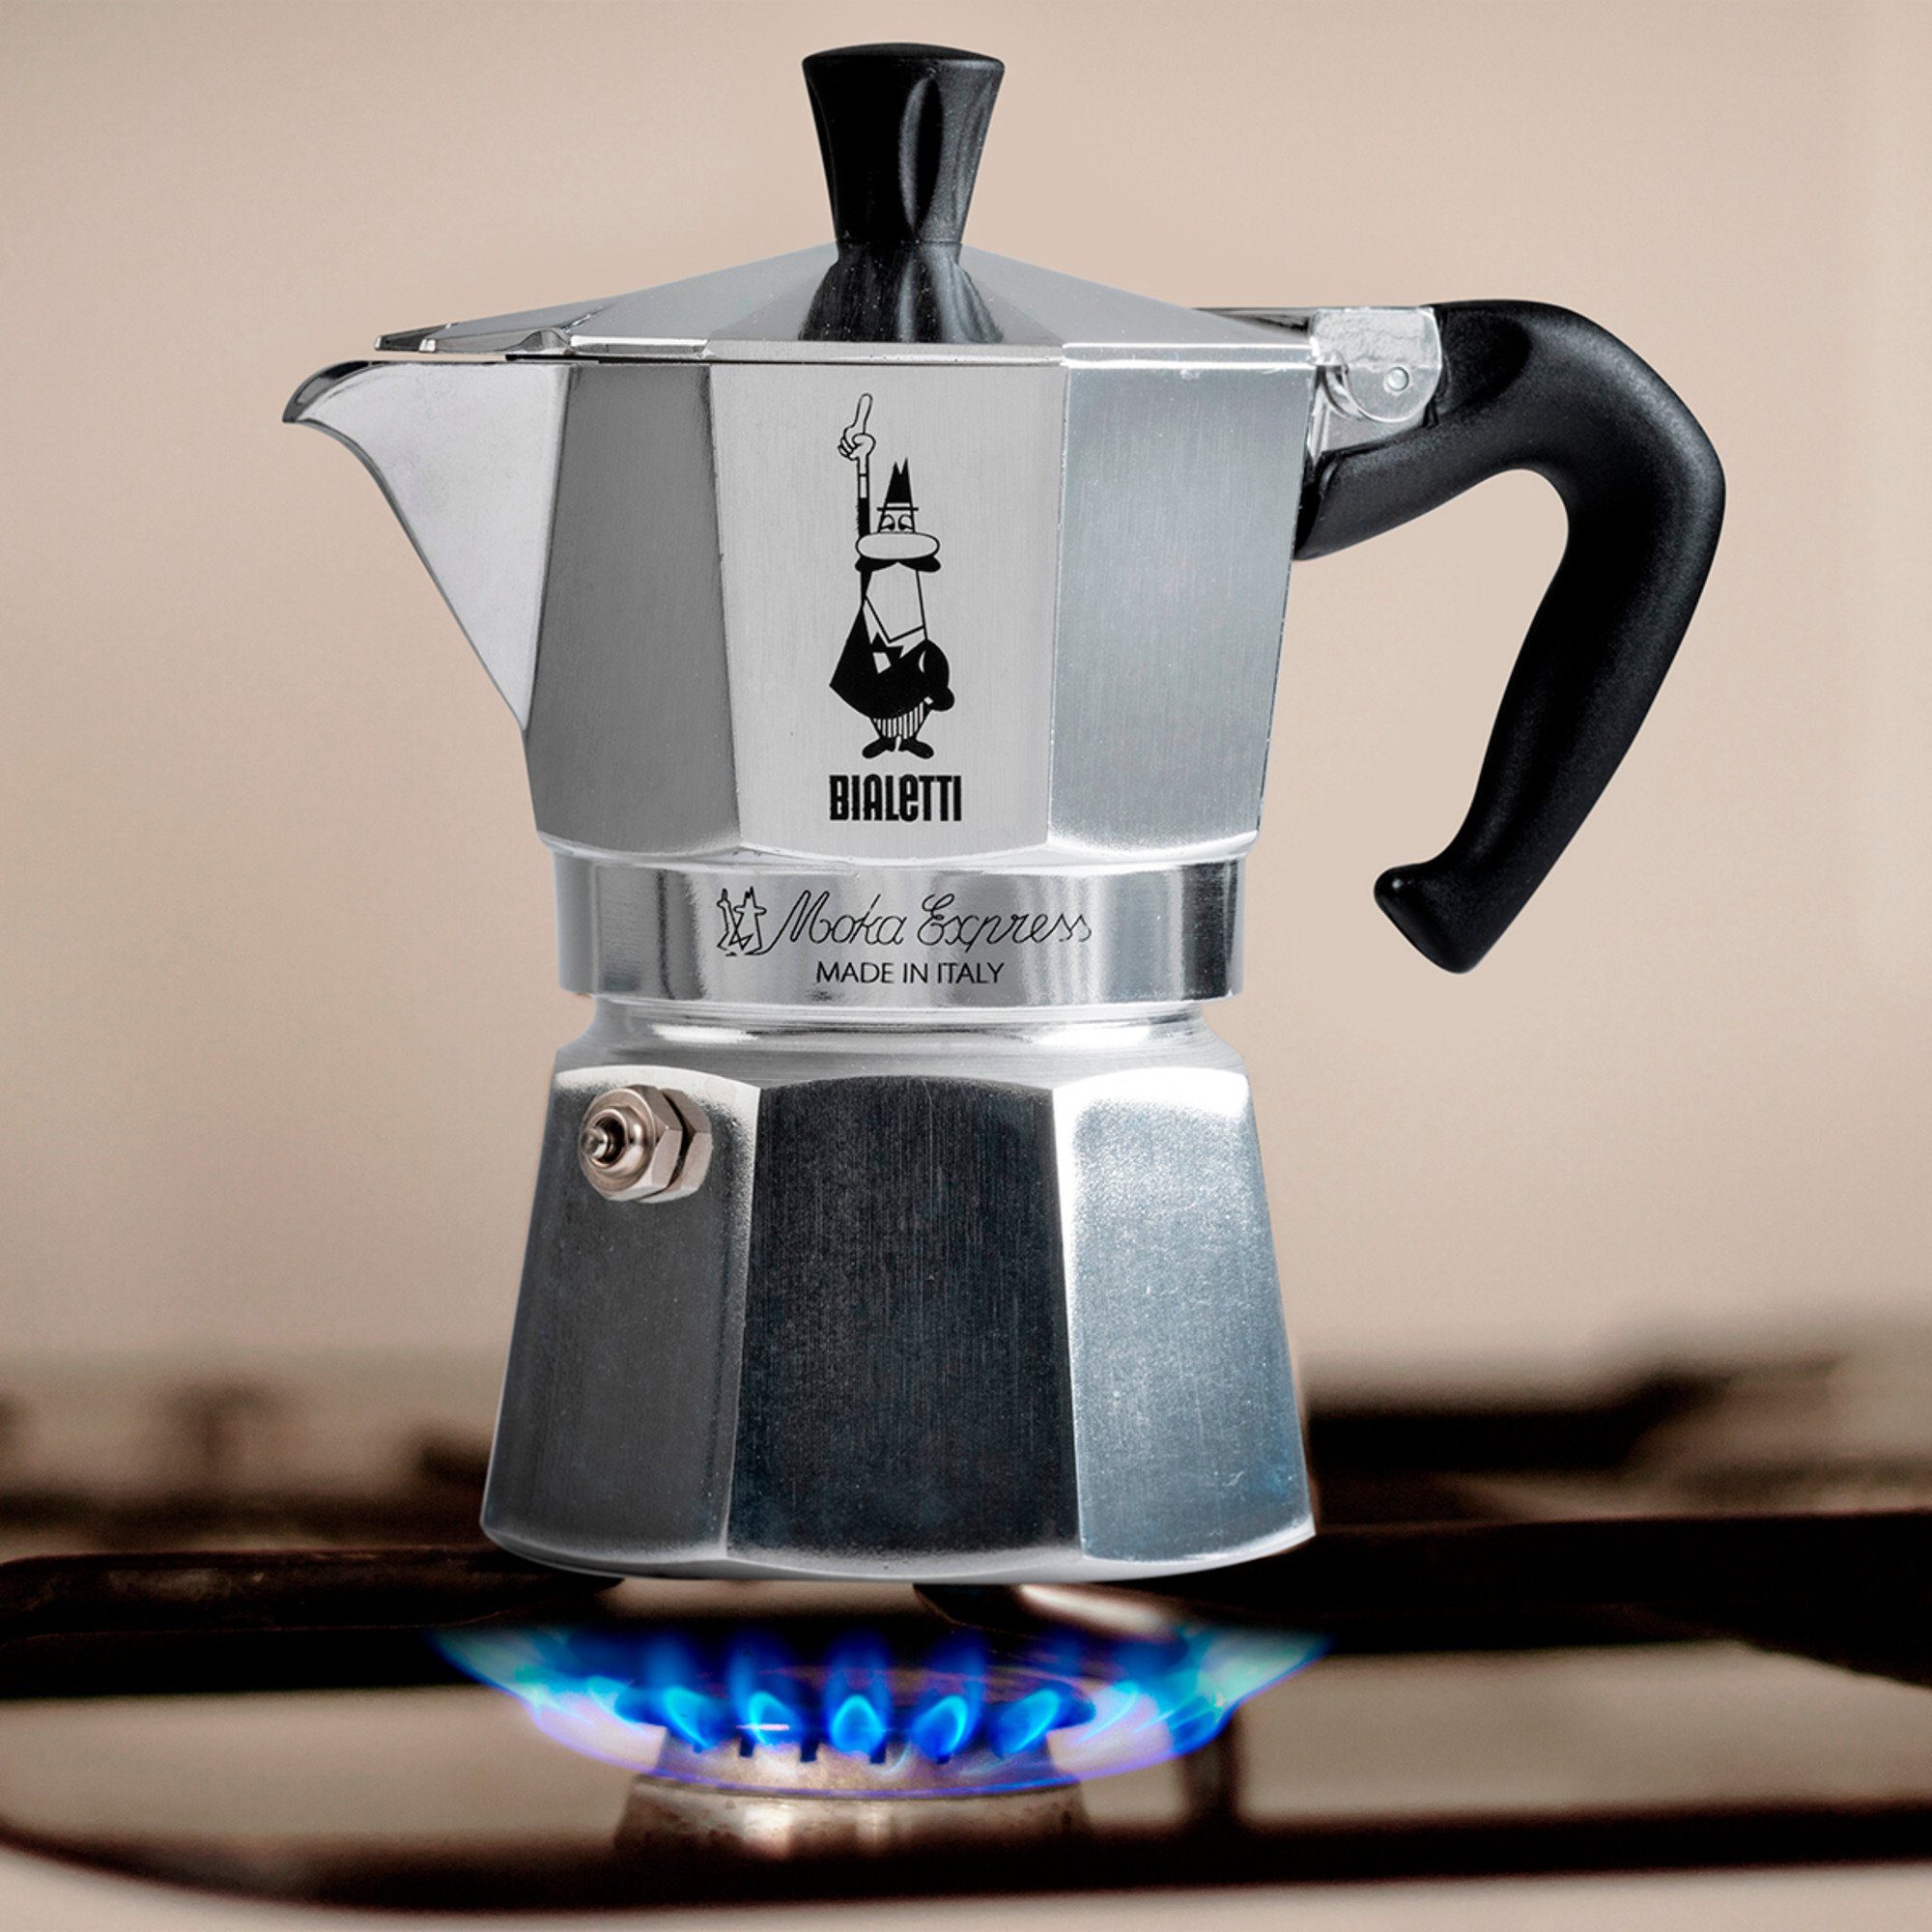 BIALETTI Kaffeebereiter Bialetti Moka Express, (18 Espressomaschine